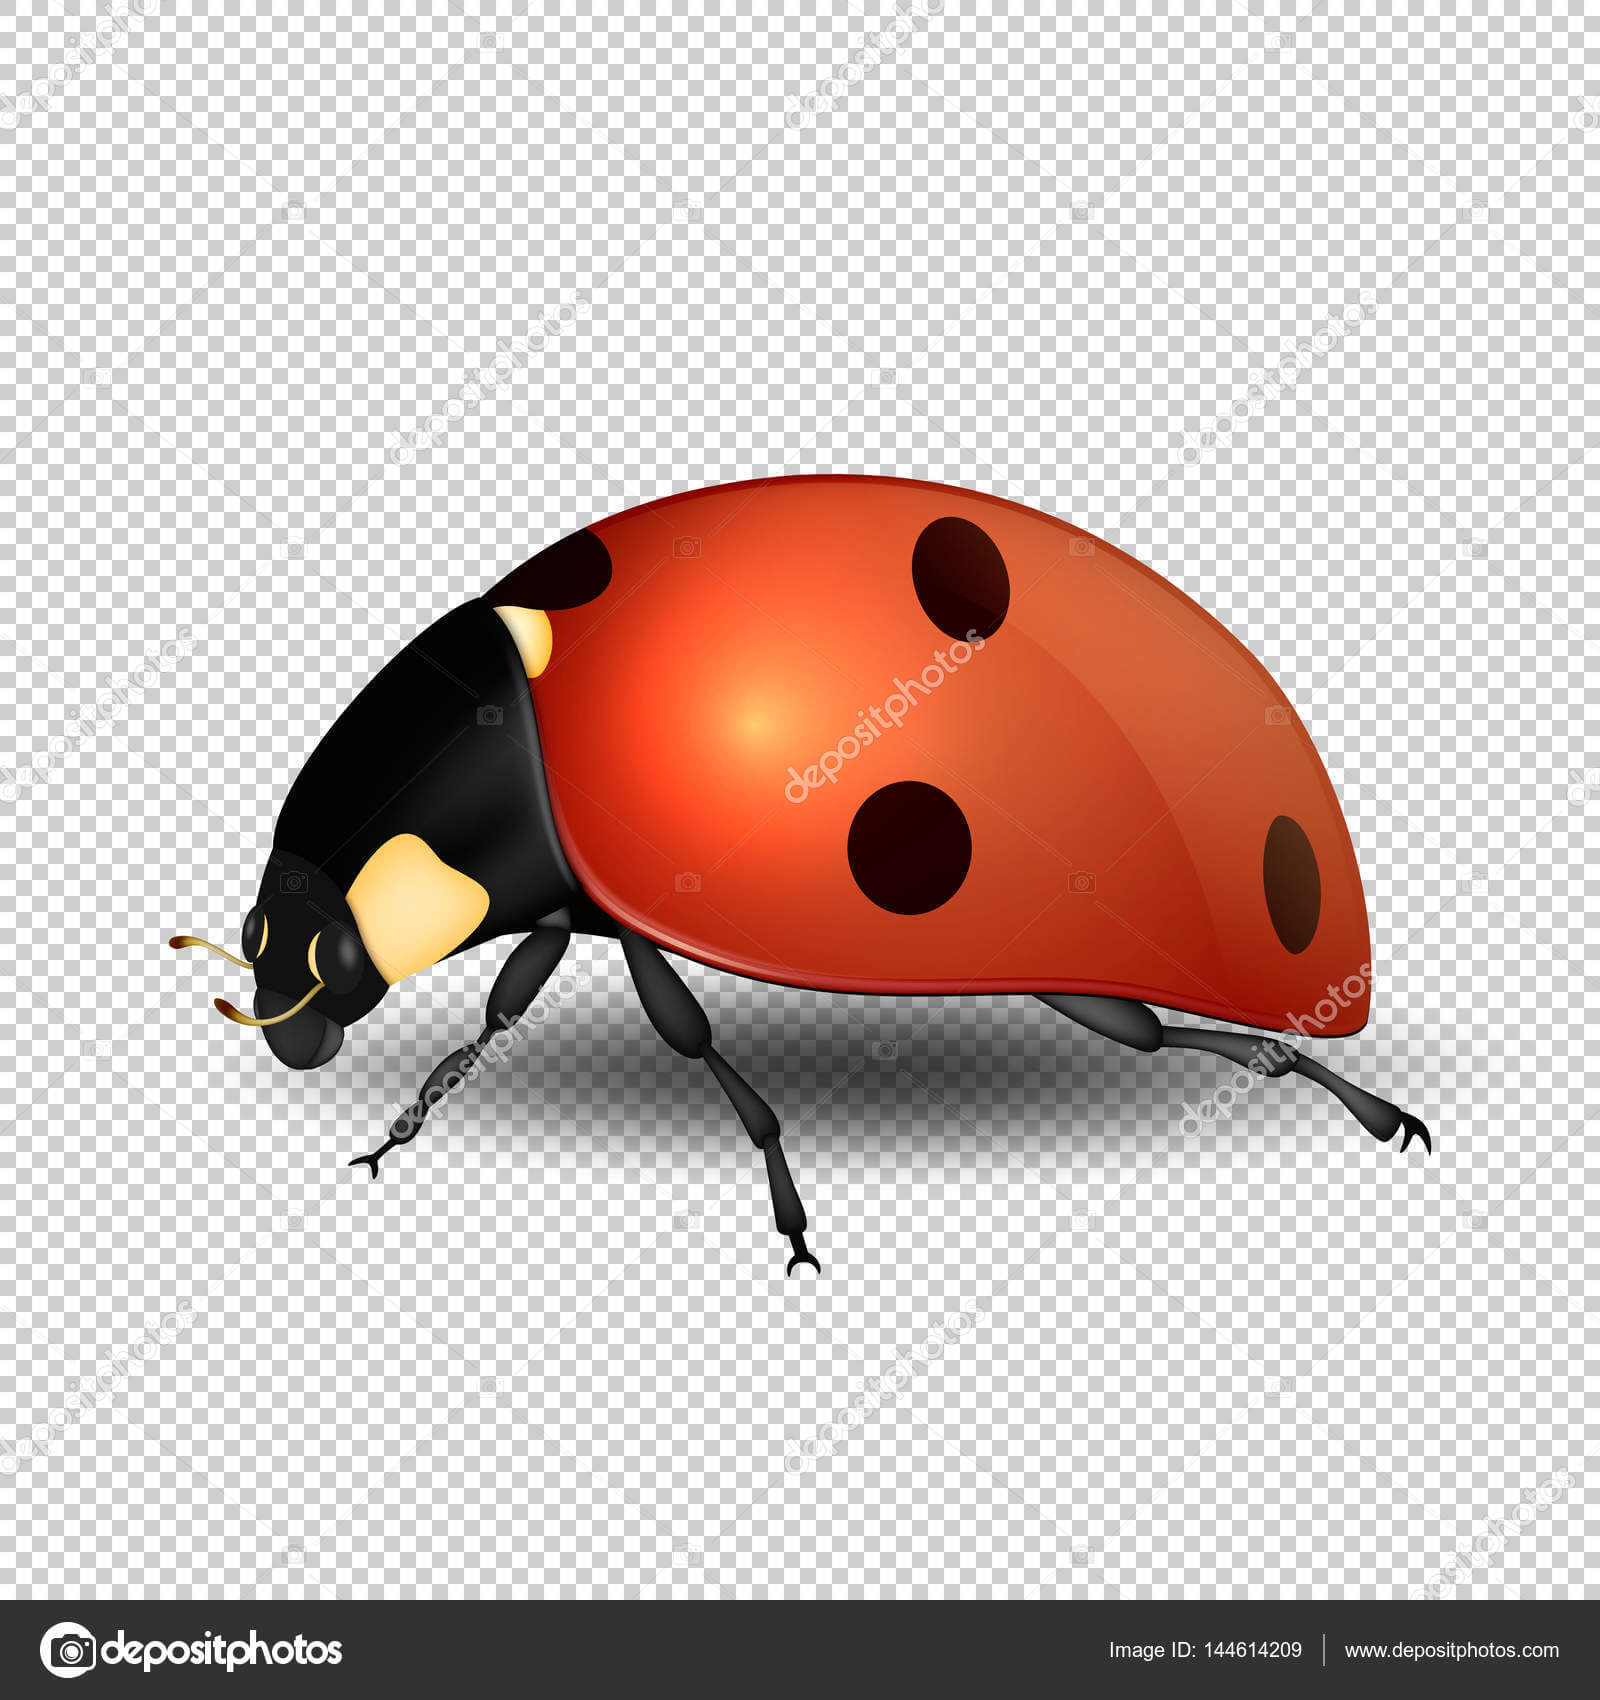 Blank Ladybug Template | Vector Close Up Realistic Ladybug In Blank Ladybug Template